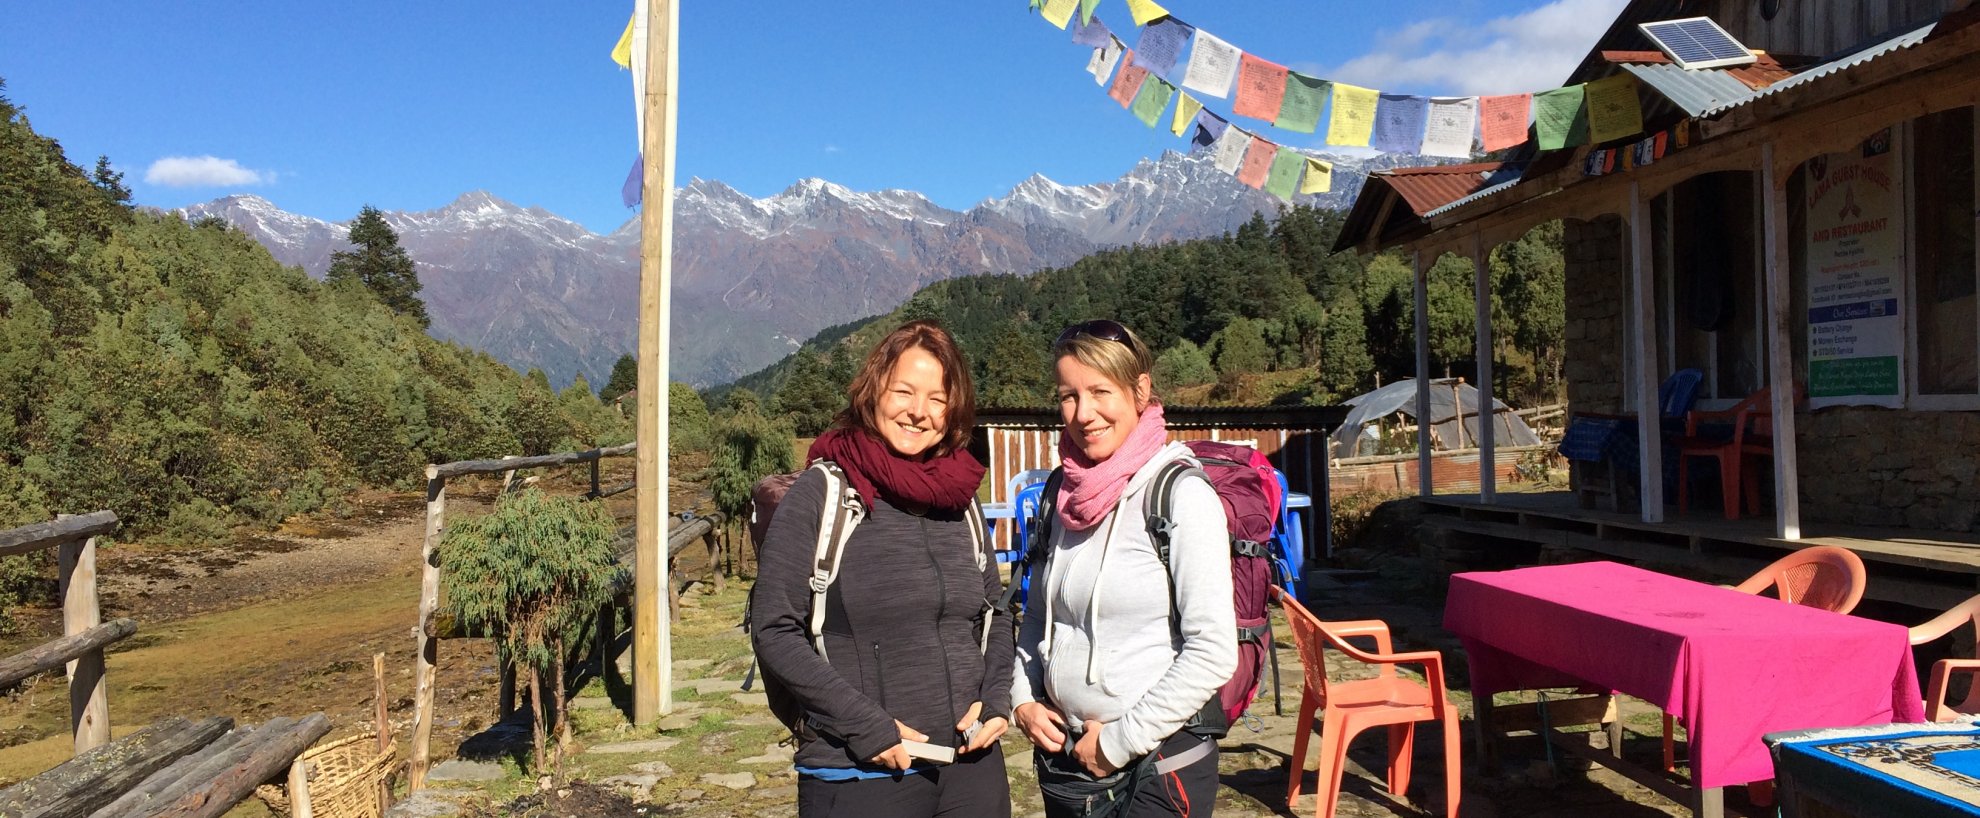 Nepal Reisen Trekking Climate Trek Himalaya wanderer gebetsfahnen Berge